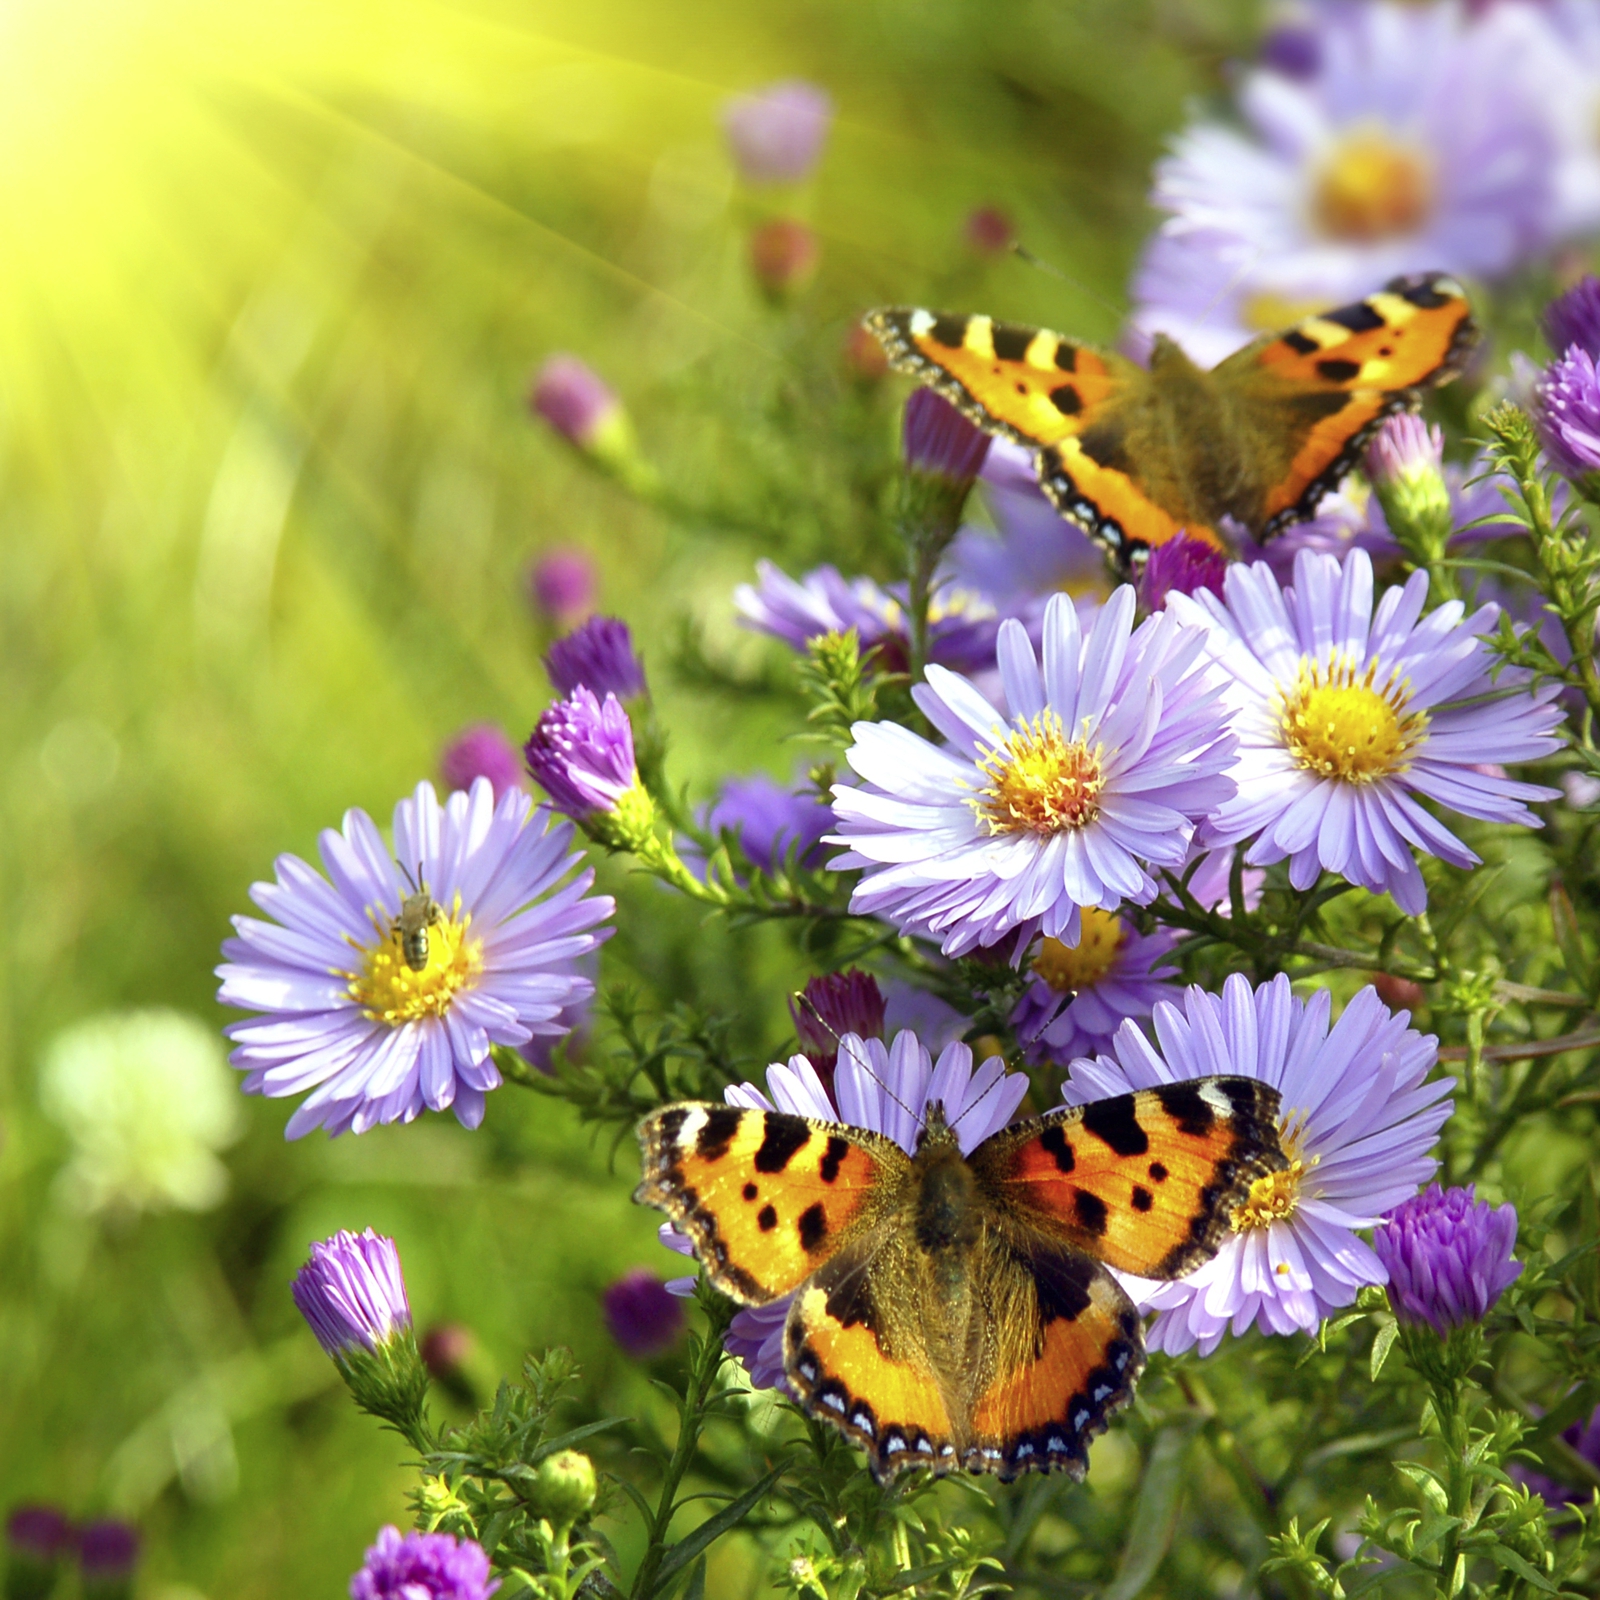 Vlies XXL-Poster Fototapete Natur & Blumen Schmetterlinge